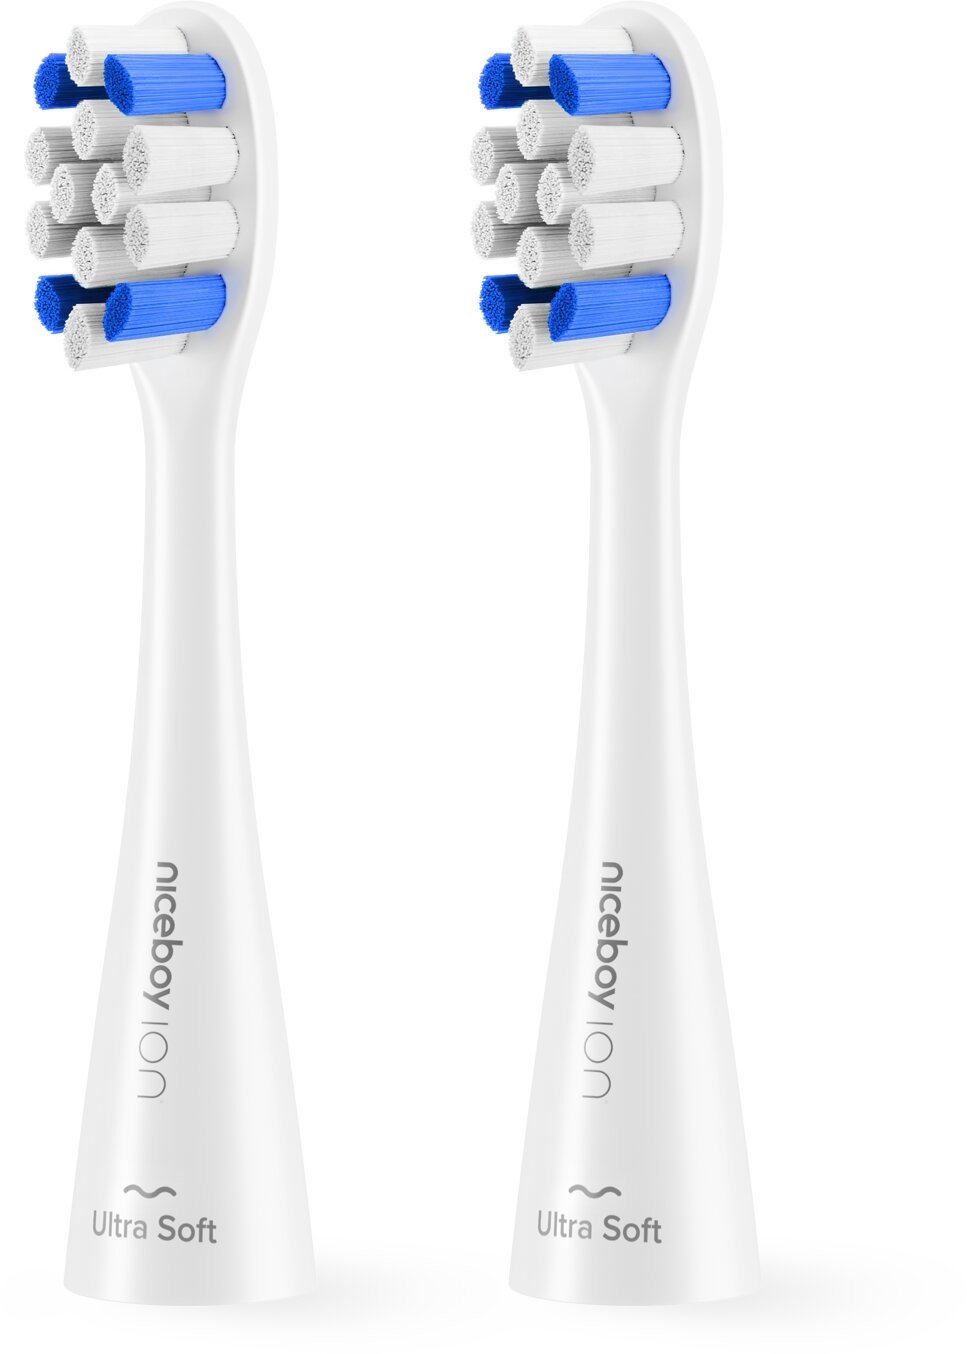 Niceboy ION Sonic Kids toothbrush heads 2 pcs Ultrasoft white - sonic-kids-ultrasoft-white